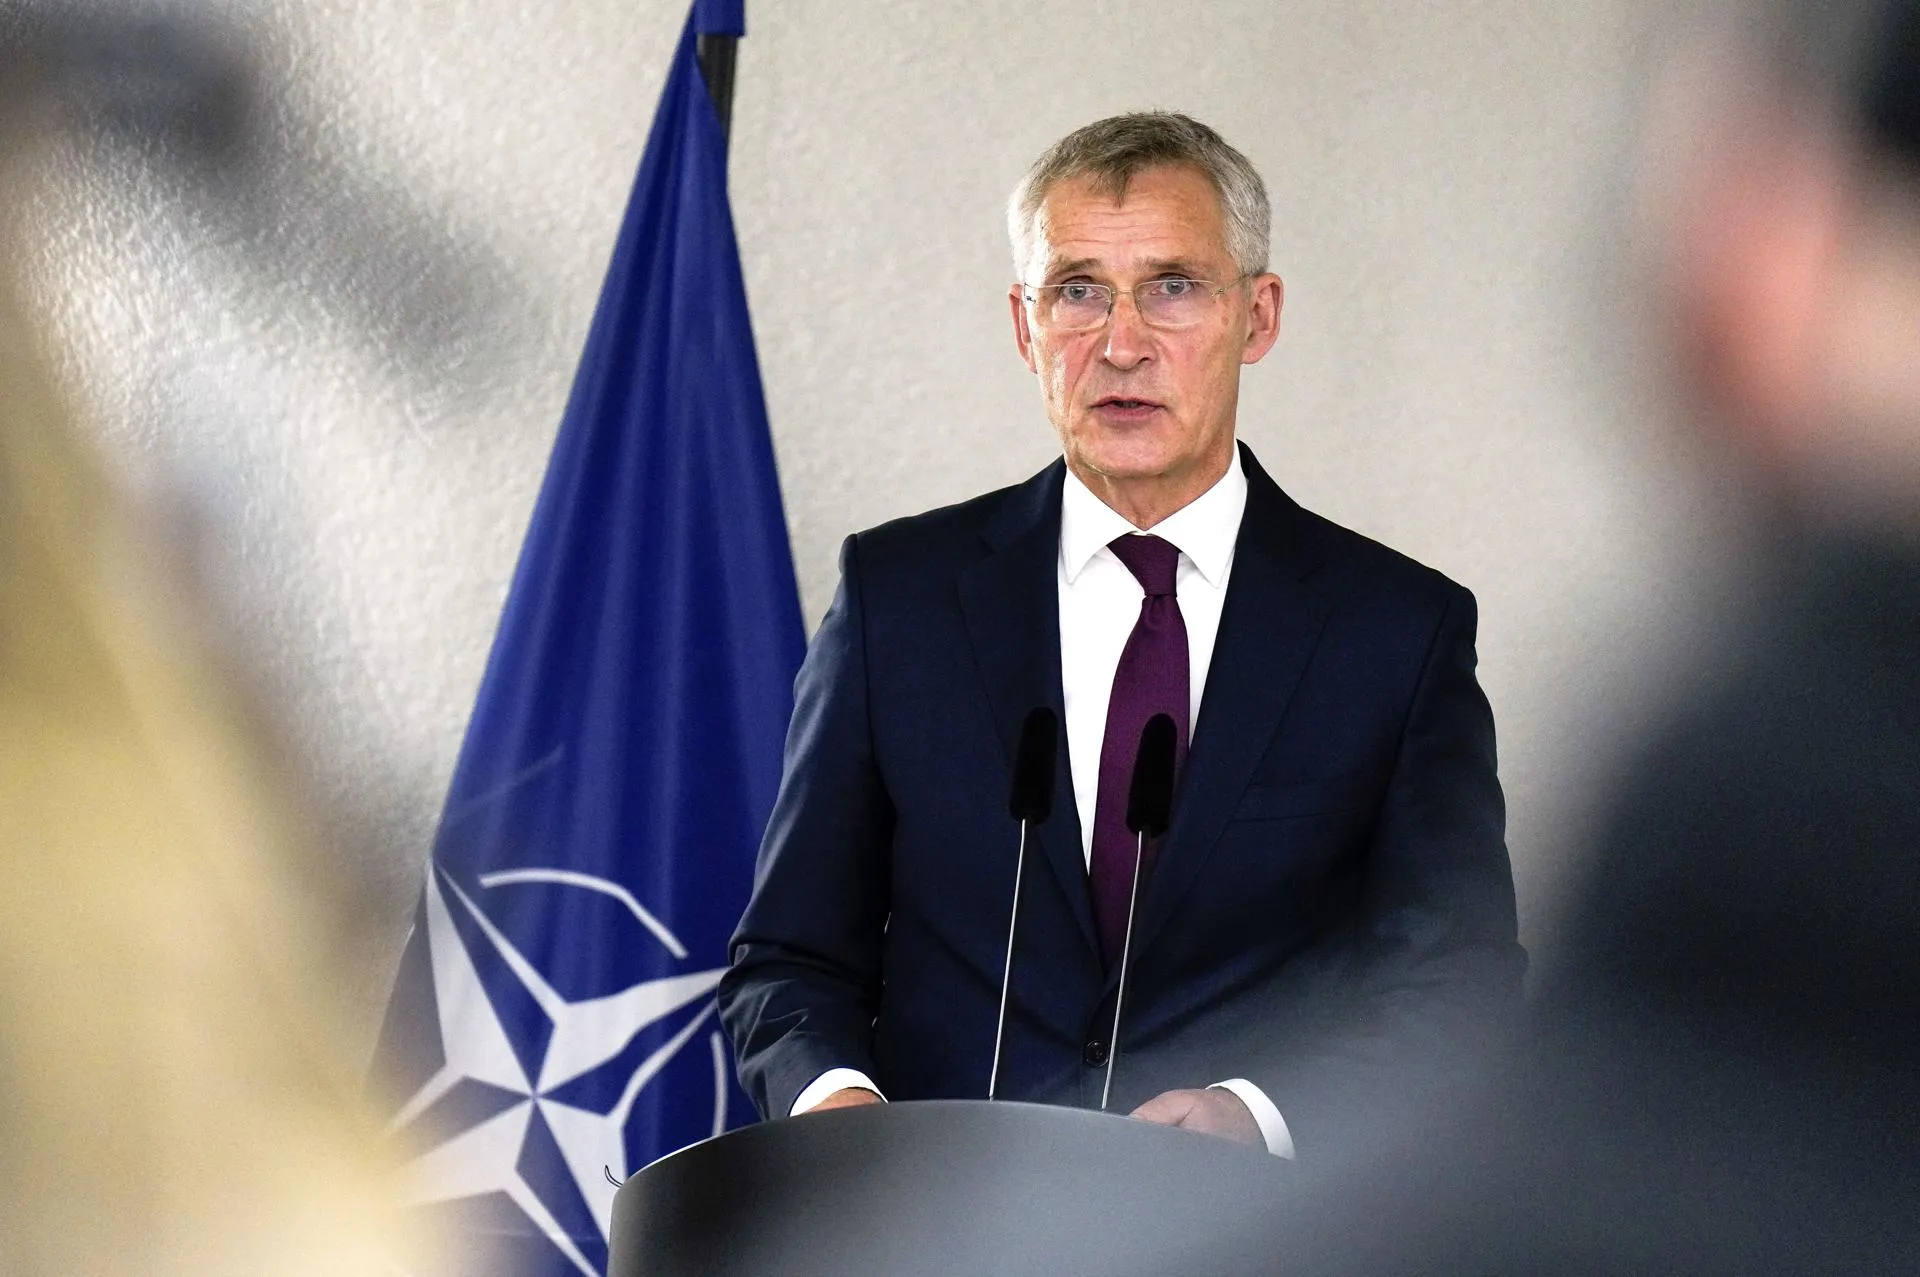 Keystone Press Agency / Генеральный секретарь НАТО Йенс Столтенберг.